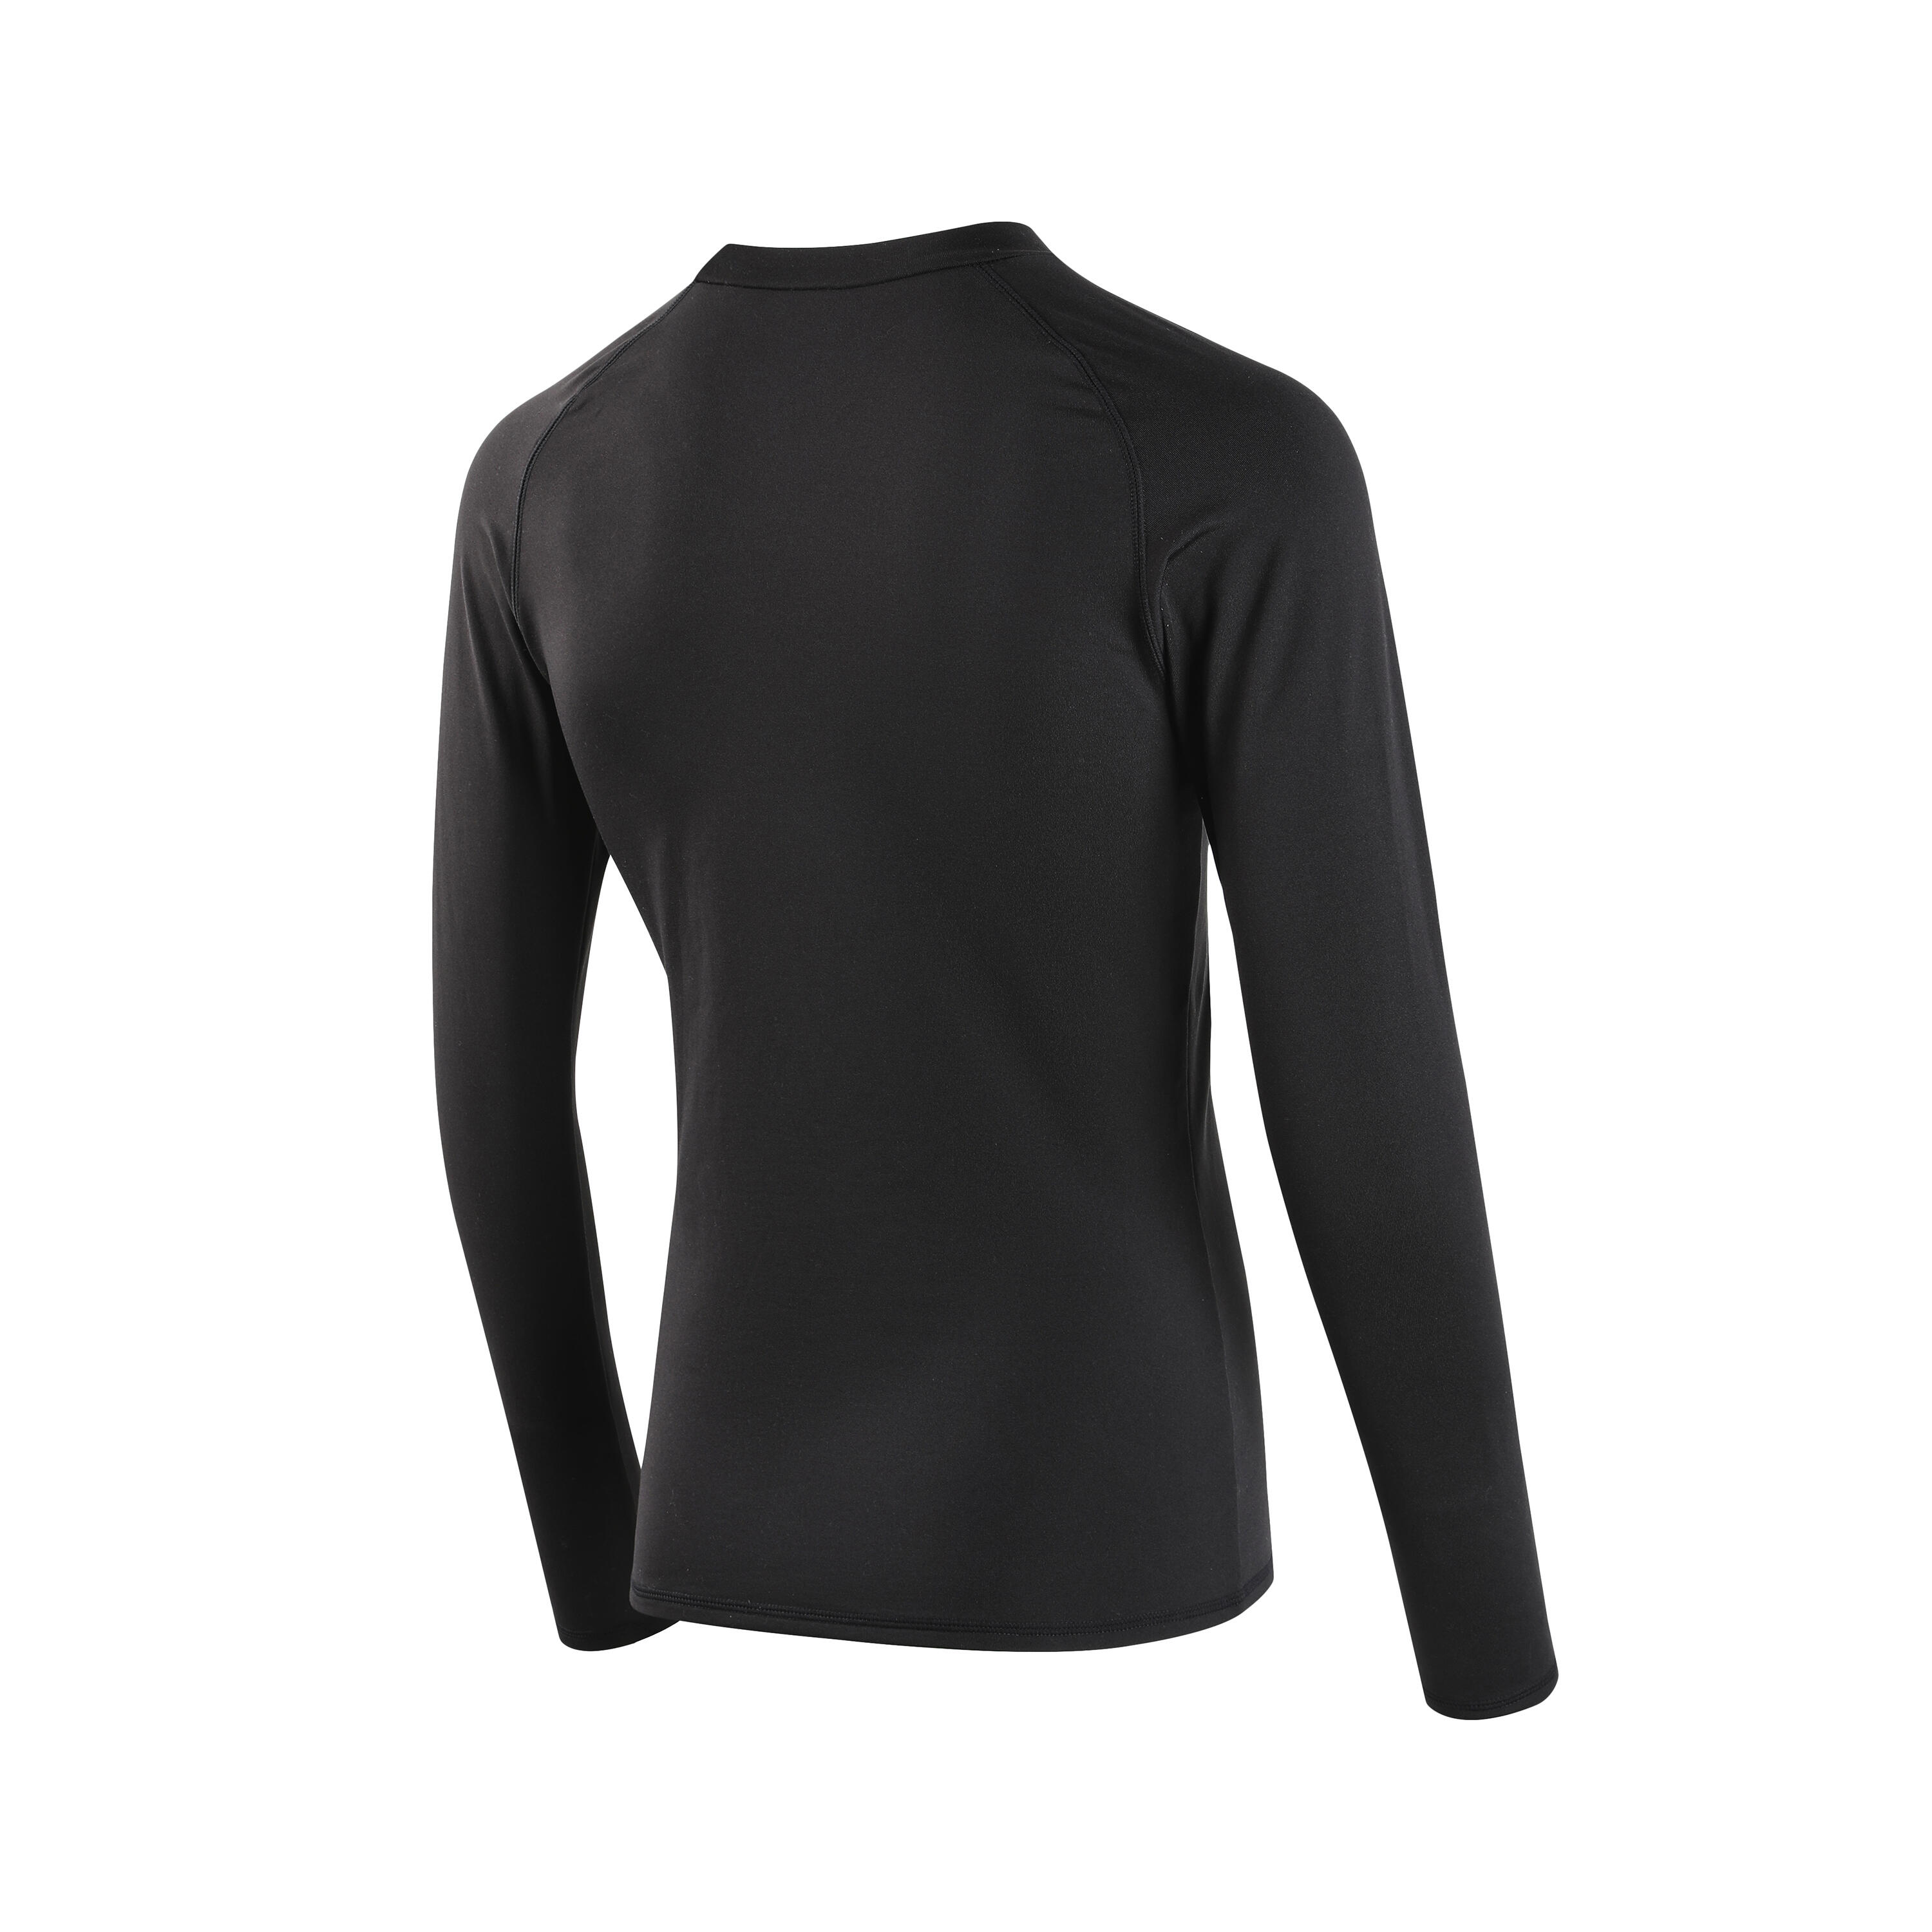 Adult Long-Sleeved Thermal Football Base Layer Top Keepcomfort 100 - Black 4/7